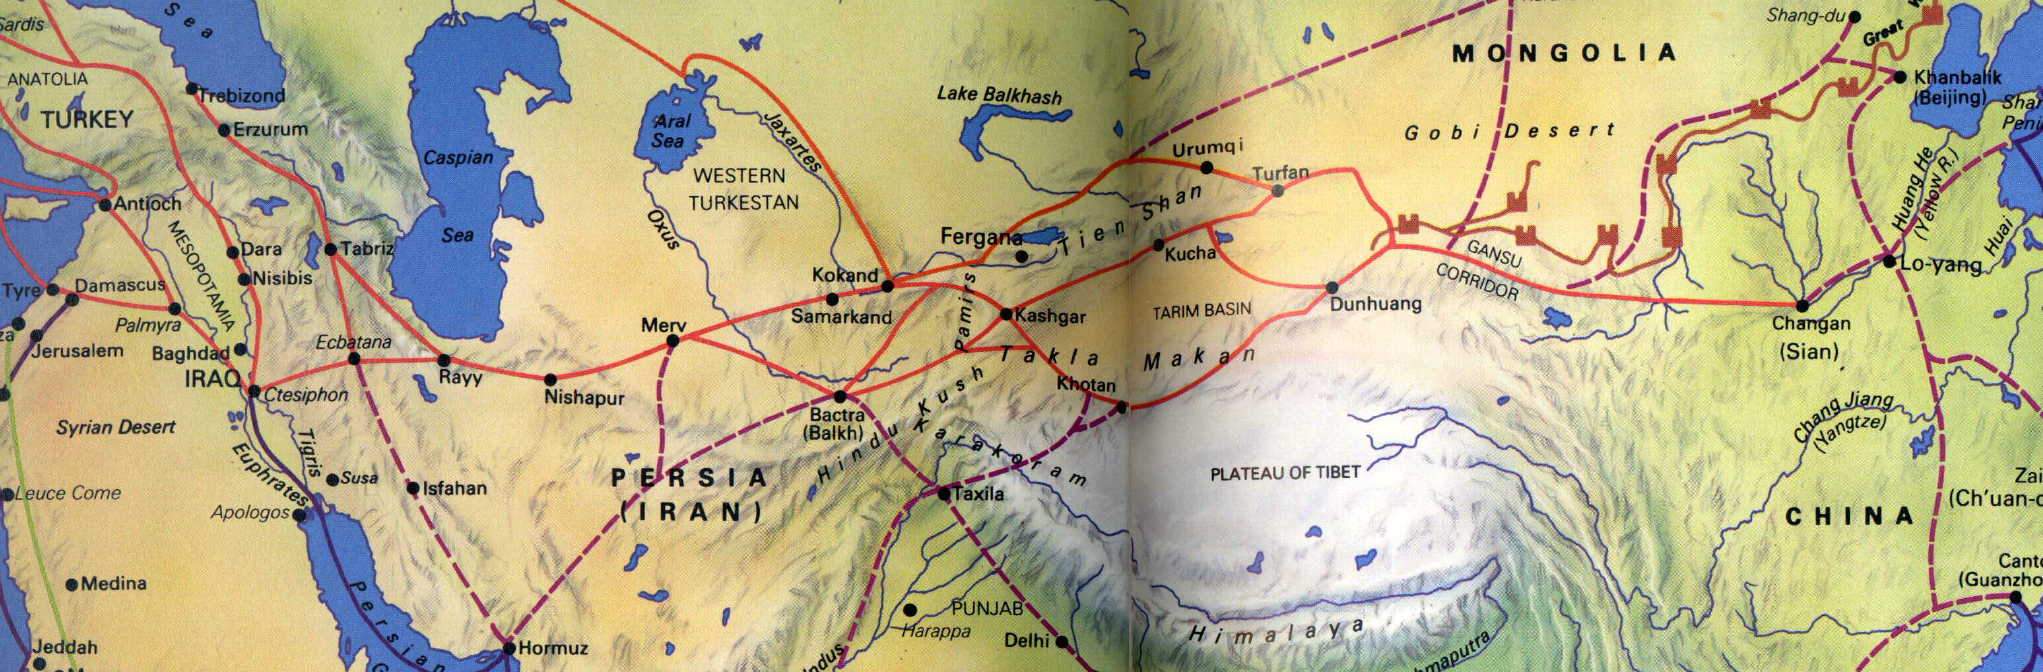 Silk Road Links